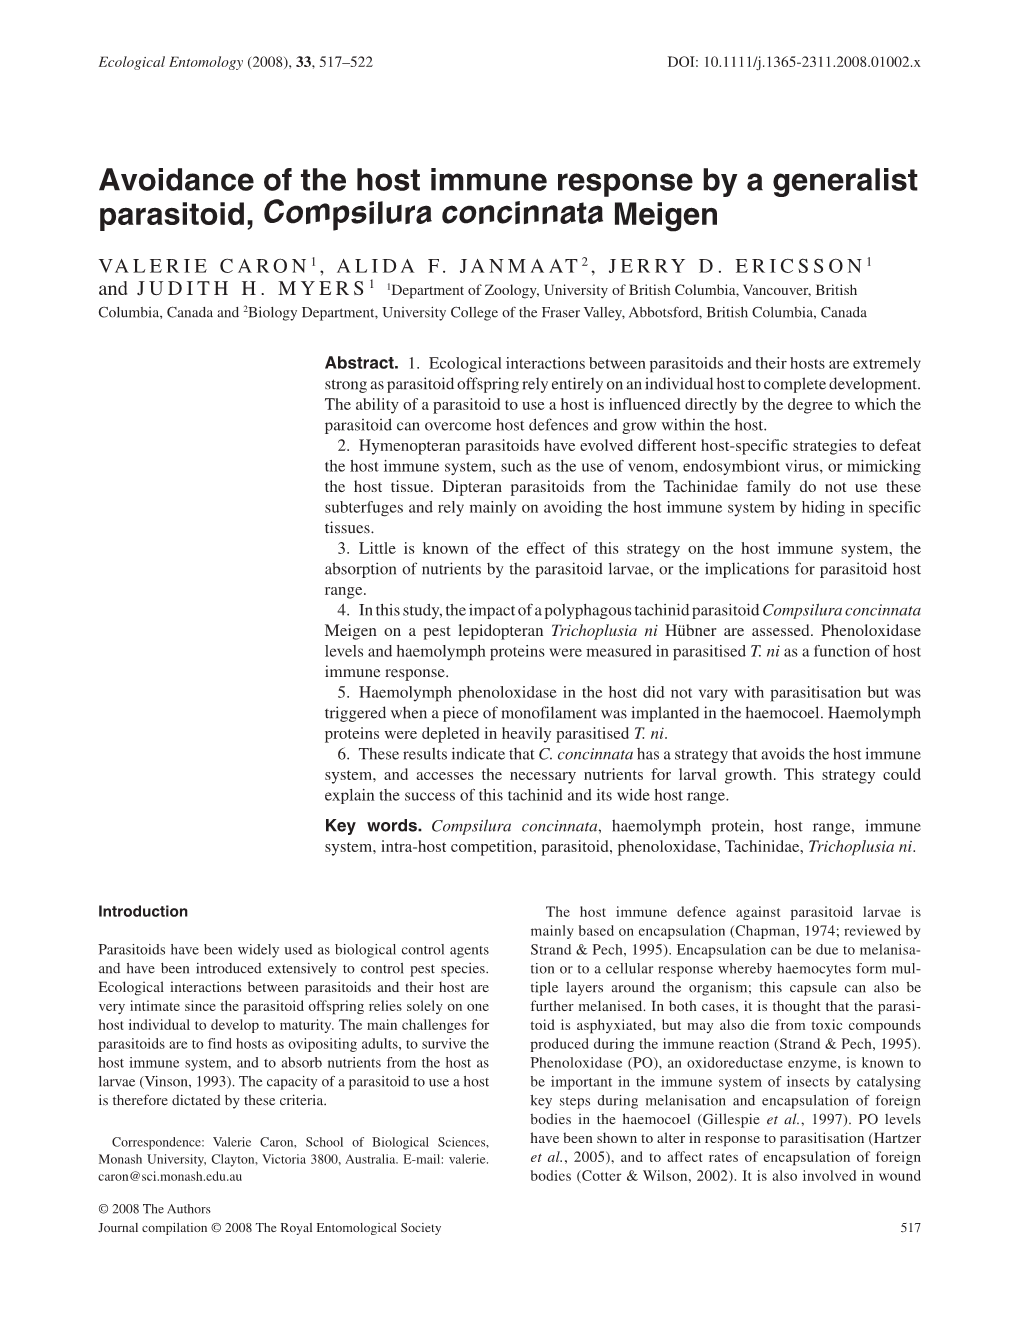 Avoidance of the Host Immune Response by a Generalist Parasitoid, Compsilura Concinnata Meigen